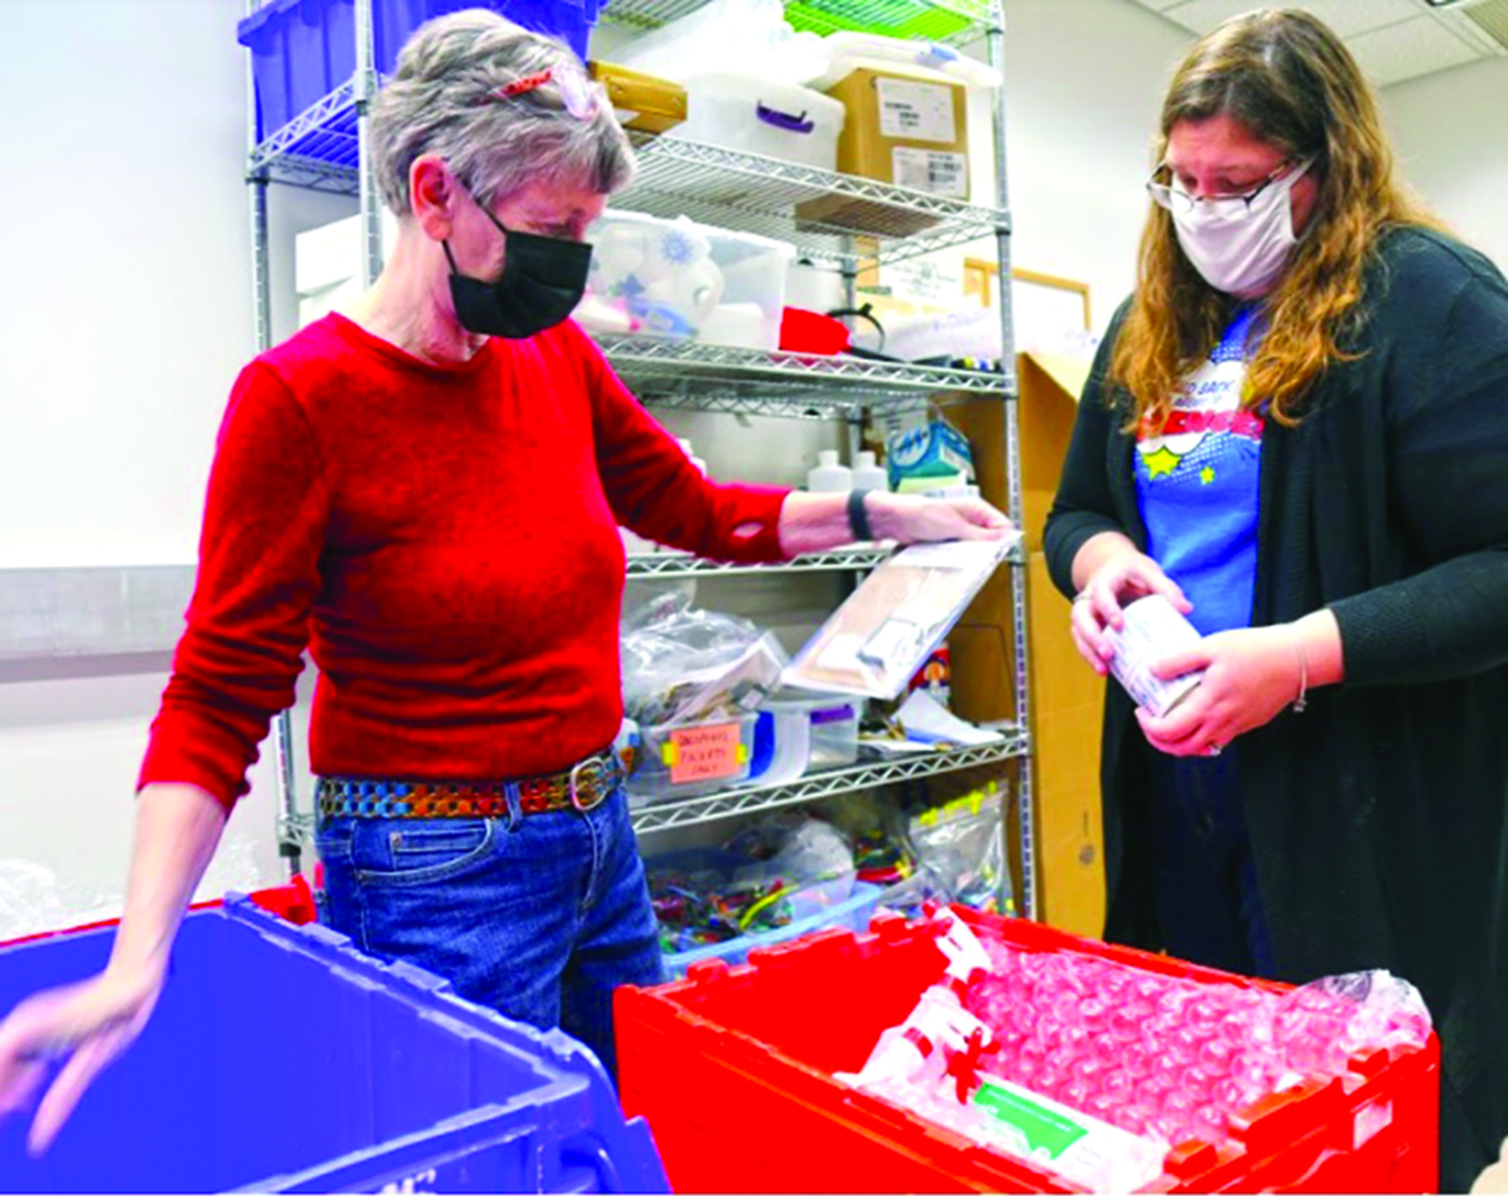 Kristi DeCourcy and Kristy Collins assemble a biotechnology kit